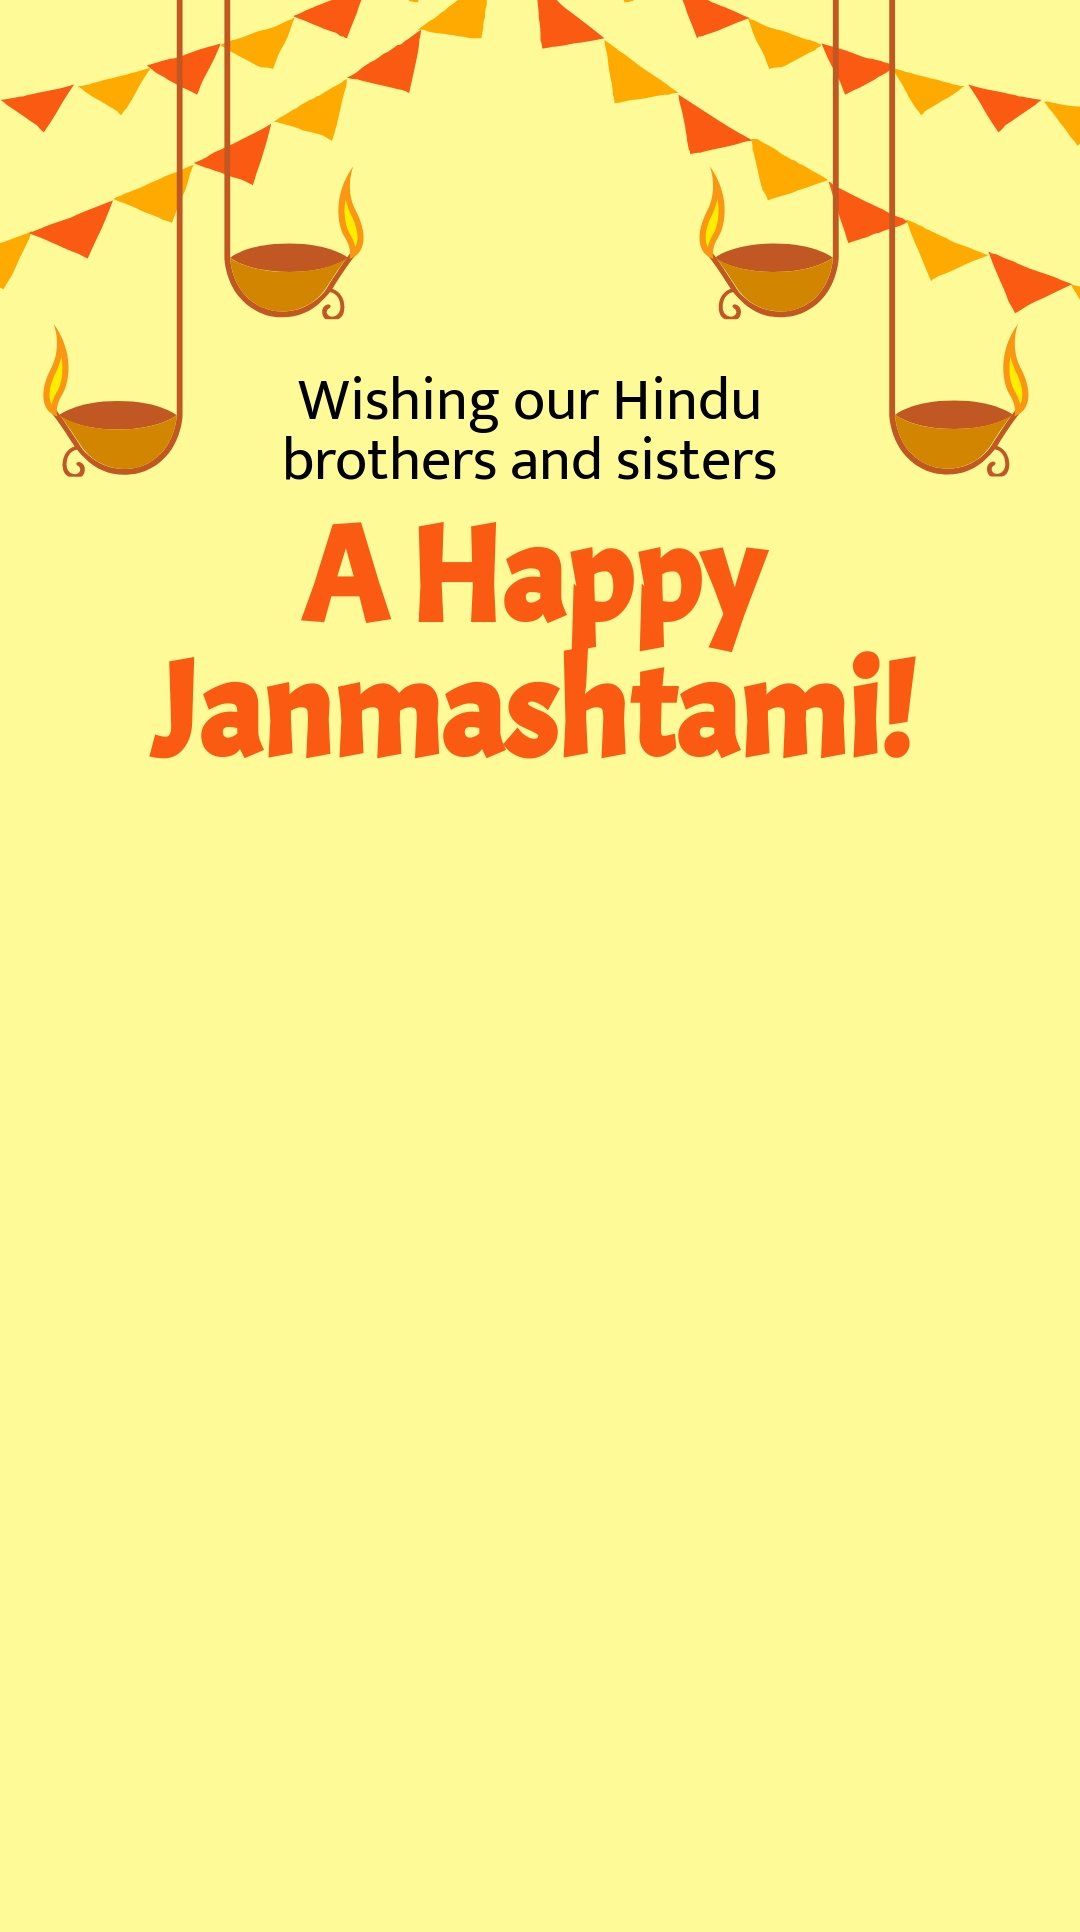 Happy Janmashtami Snapchat Geofilter Template